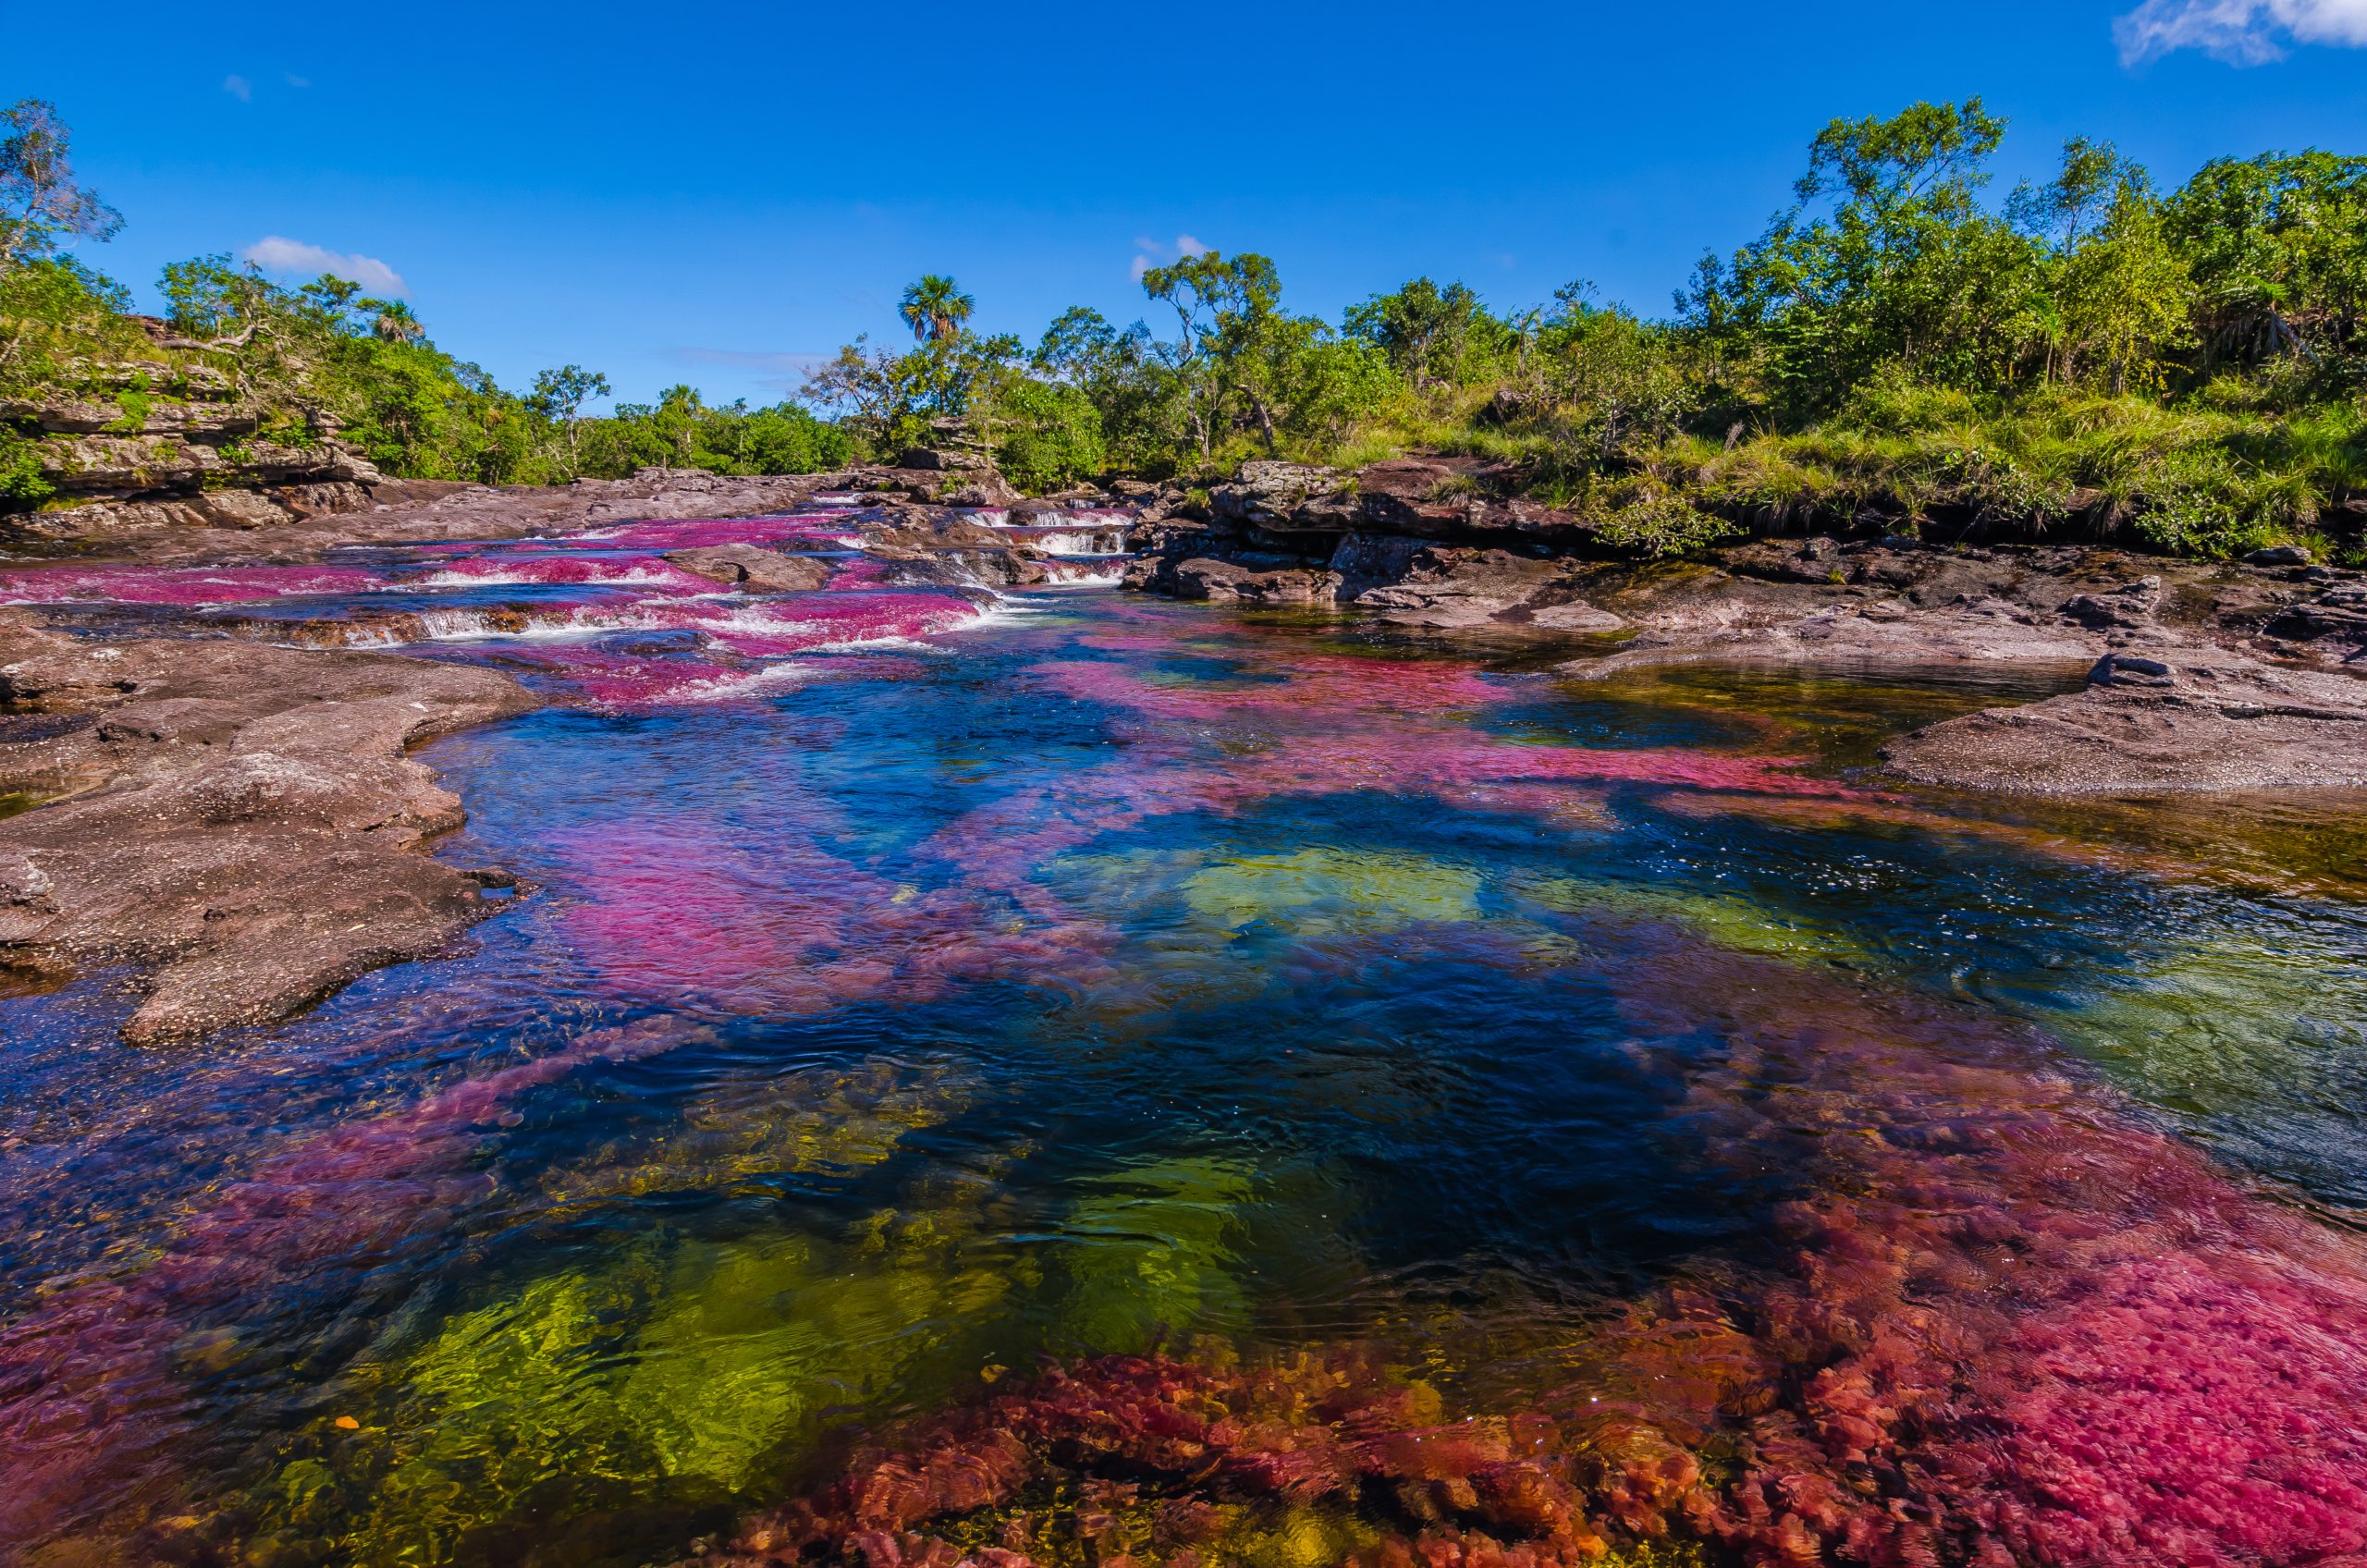 Bunte Reiseziele in Kolumbien - der Fünf-Farben-Fluss Caño Cristales im Nationalpark Serranía de la Macarena